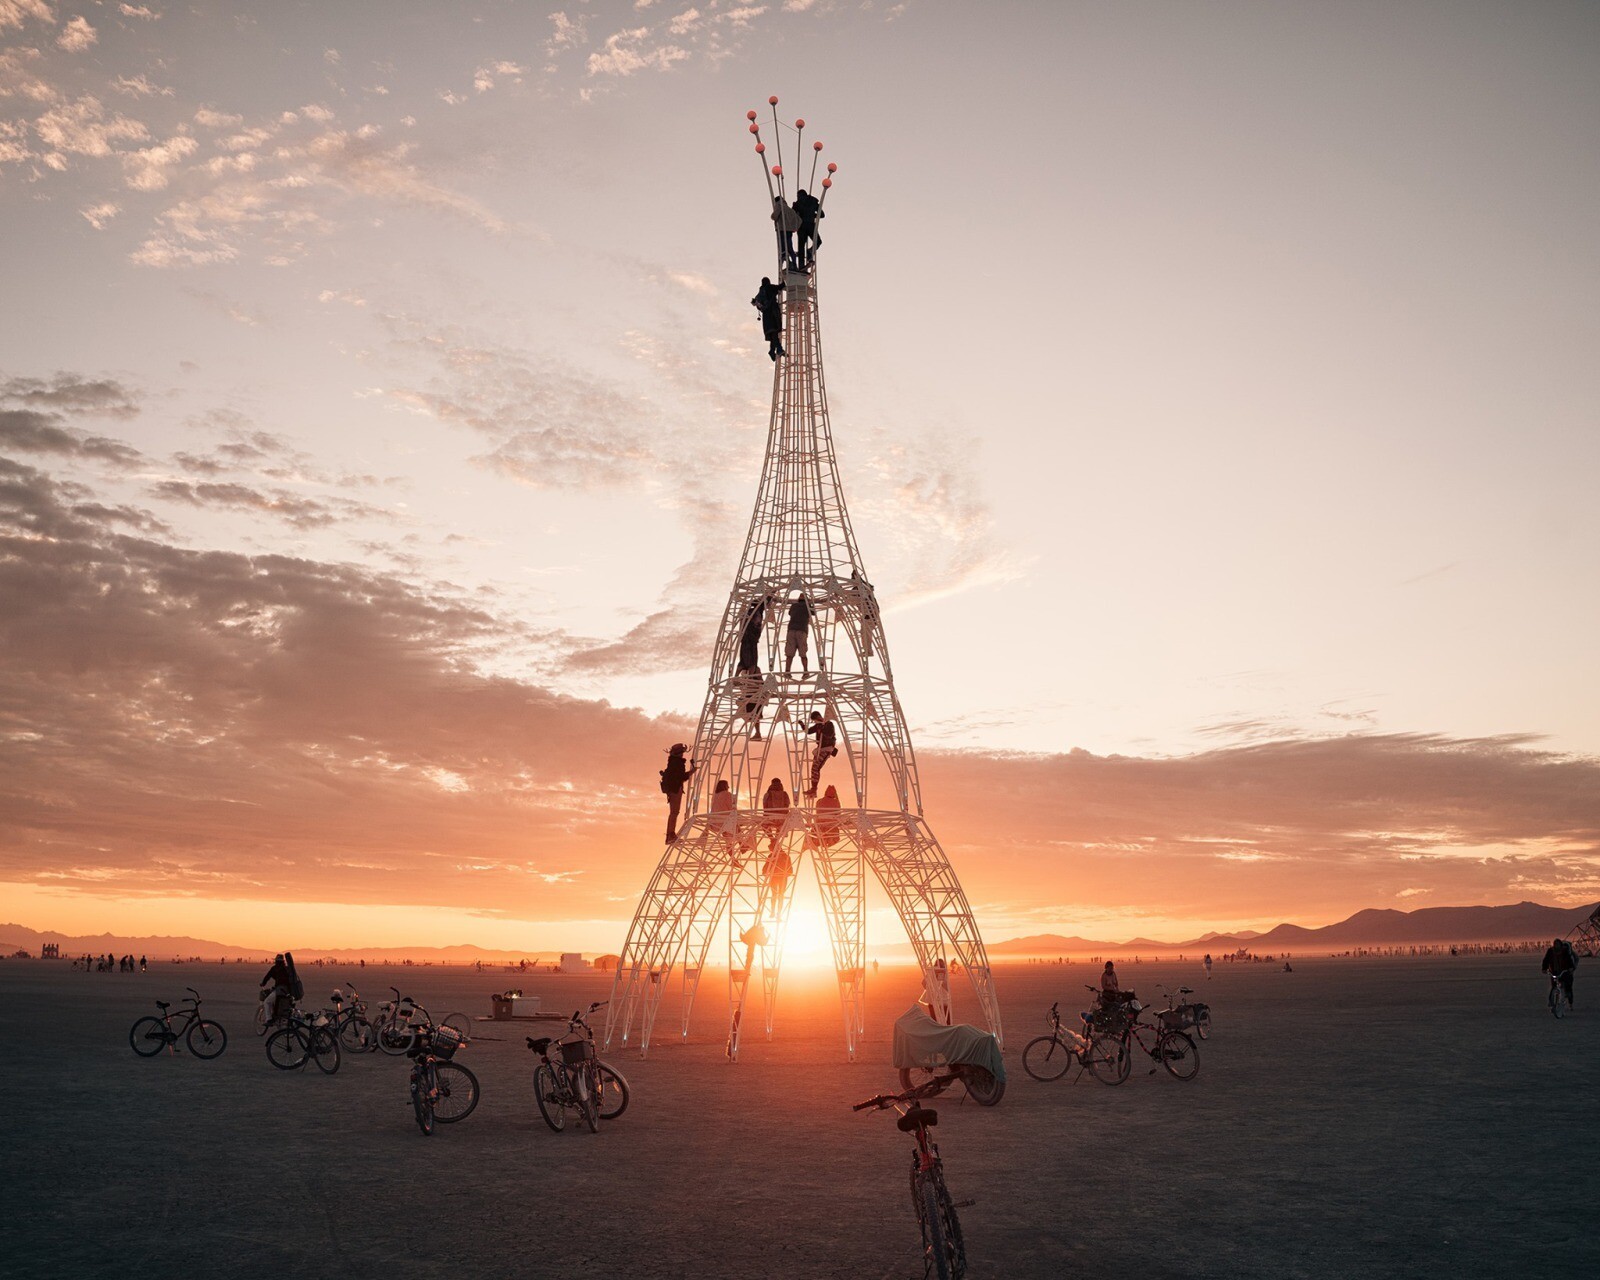 Iflyer 新型コロナのワクチン接種を参加必須条件として開催を検討し一部から反発を招いていた砂漠のフェス Burning Man バーニングマン 最終的に21年度の開催もキャンセルに